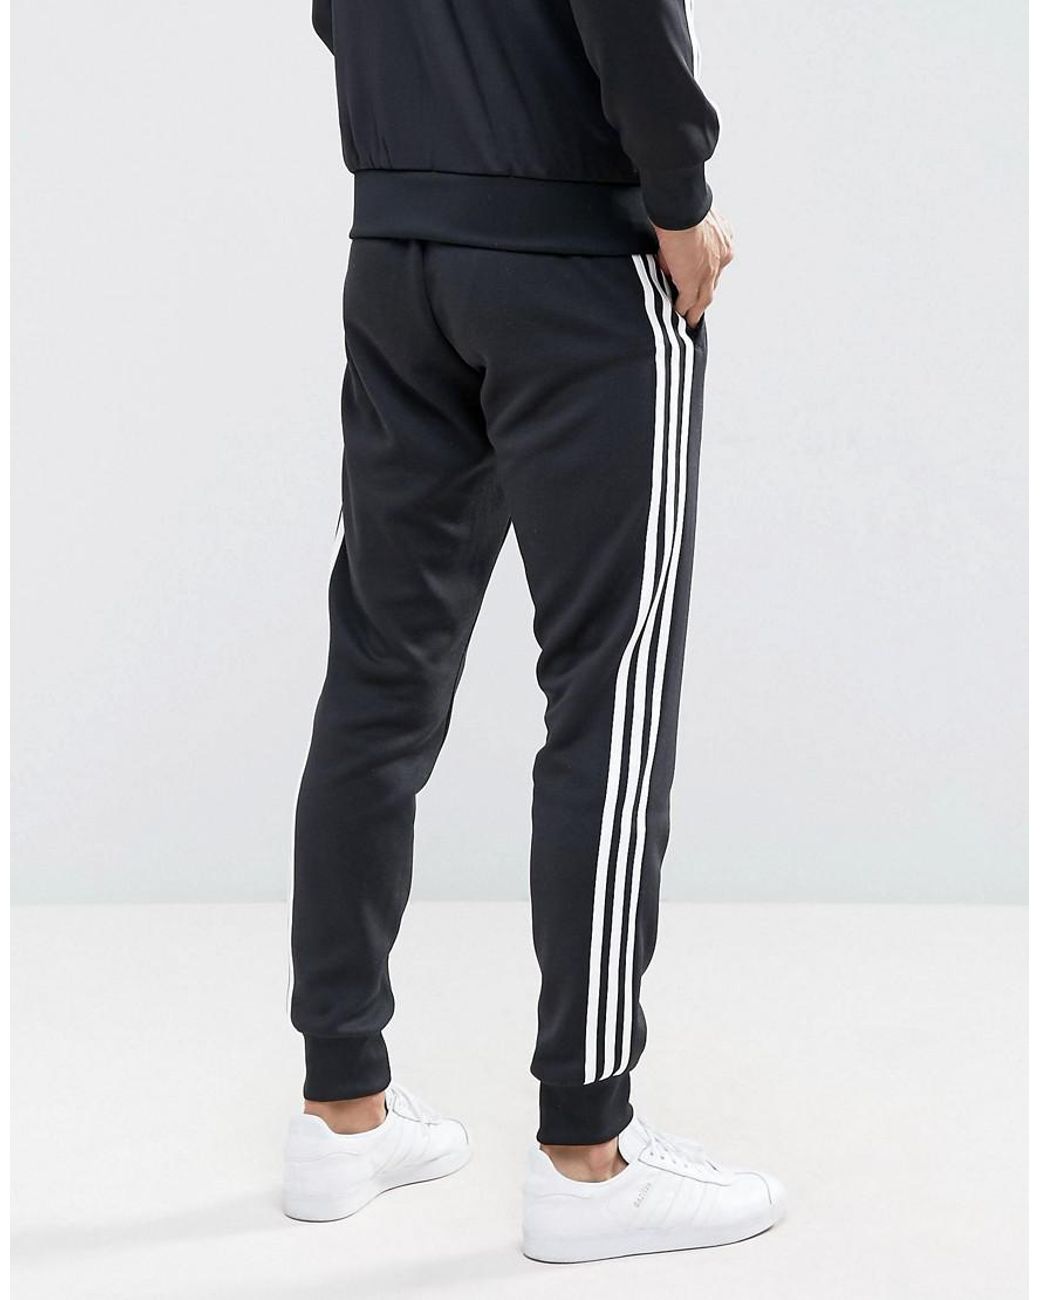 Adidas Originals Superstar Trackpant Cuffed Knit Black Women AY5233  ()